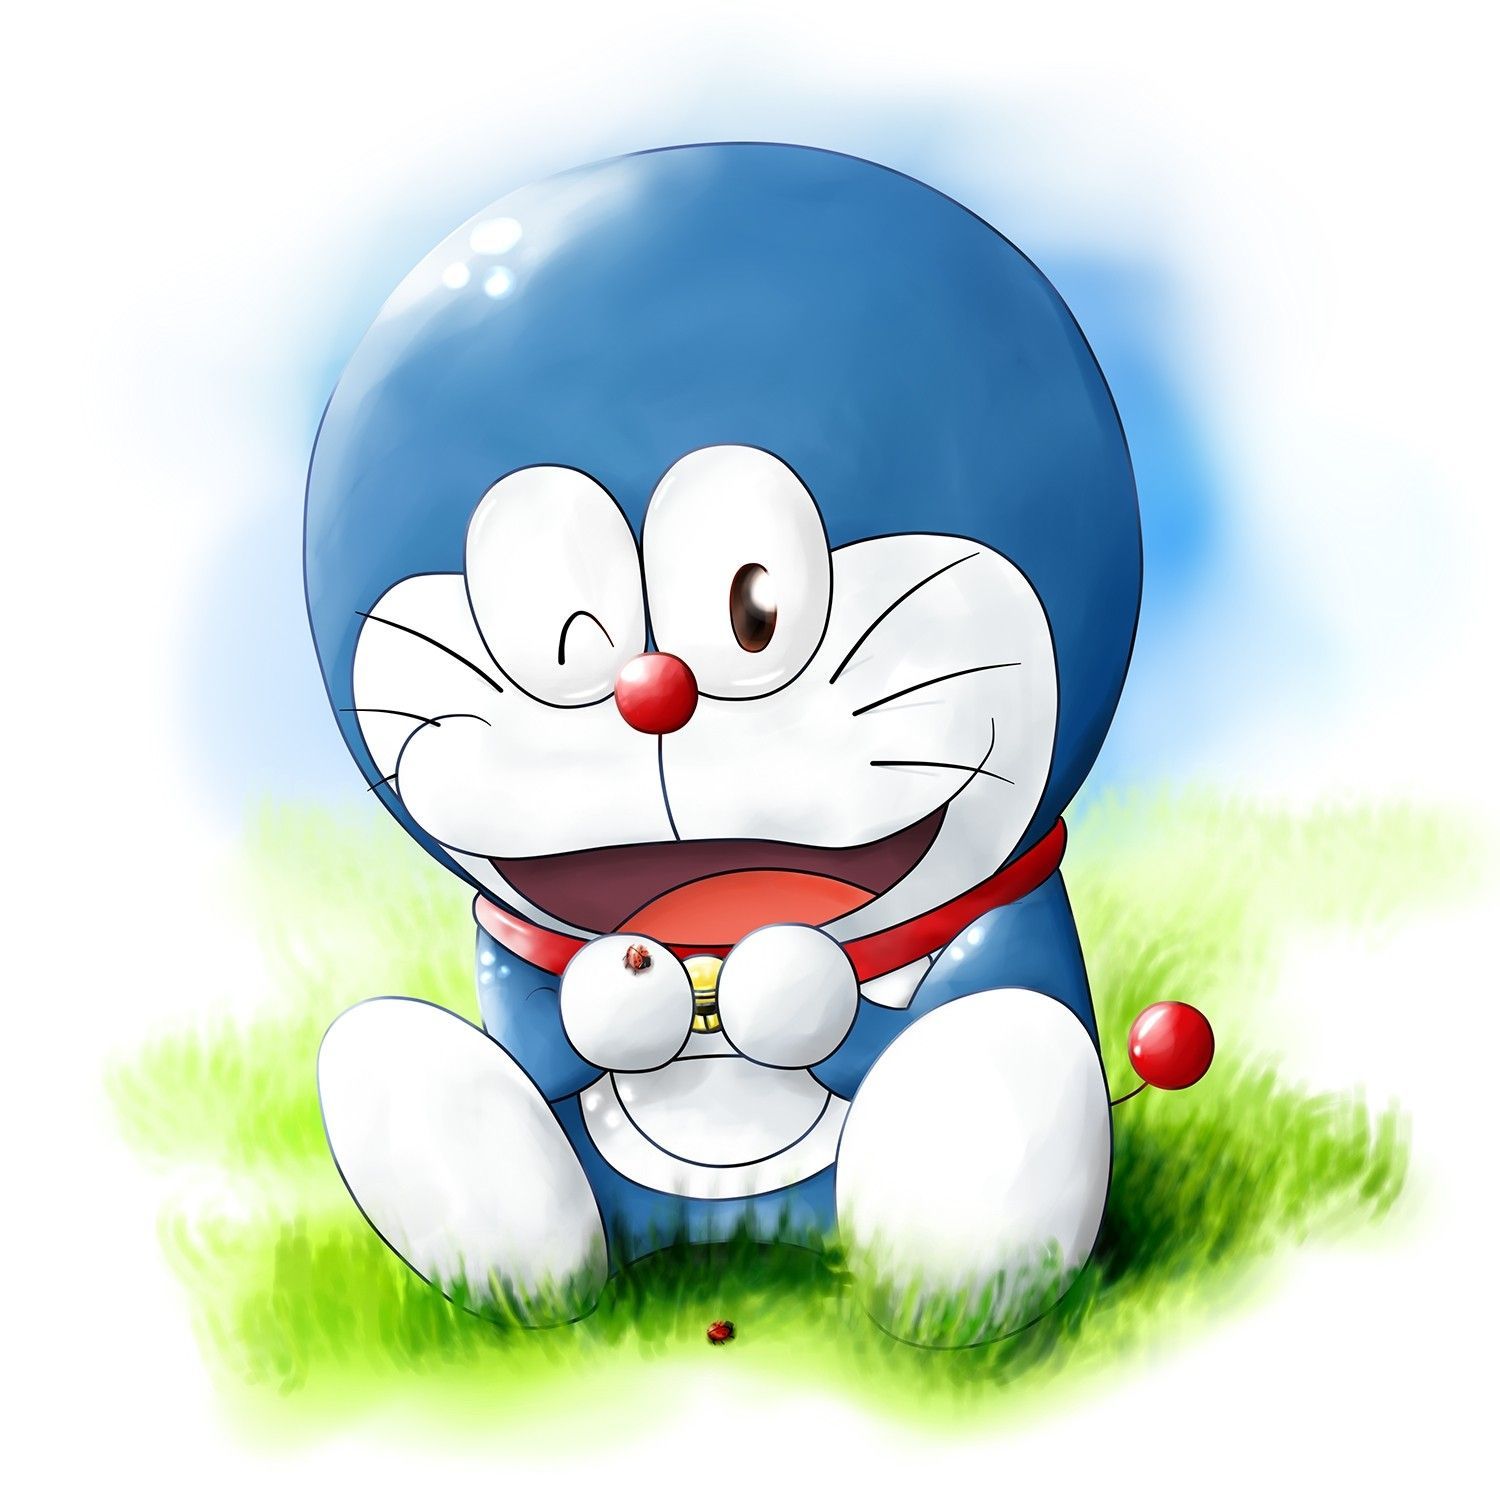 Doraemon cartoon wallpaper with a white and blue cat sitting on grass - Doraemon